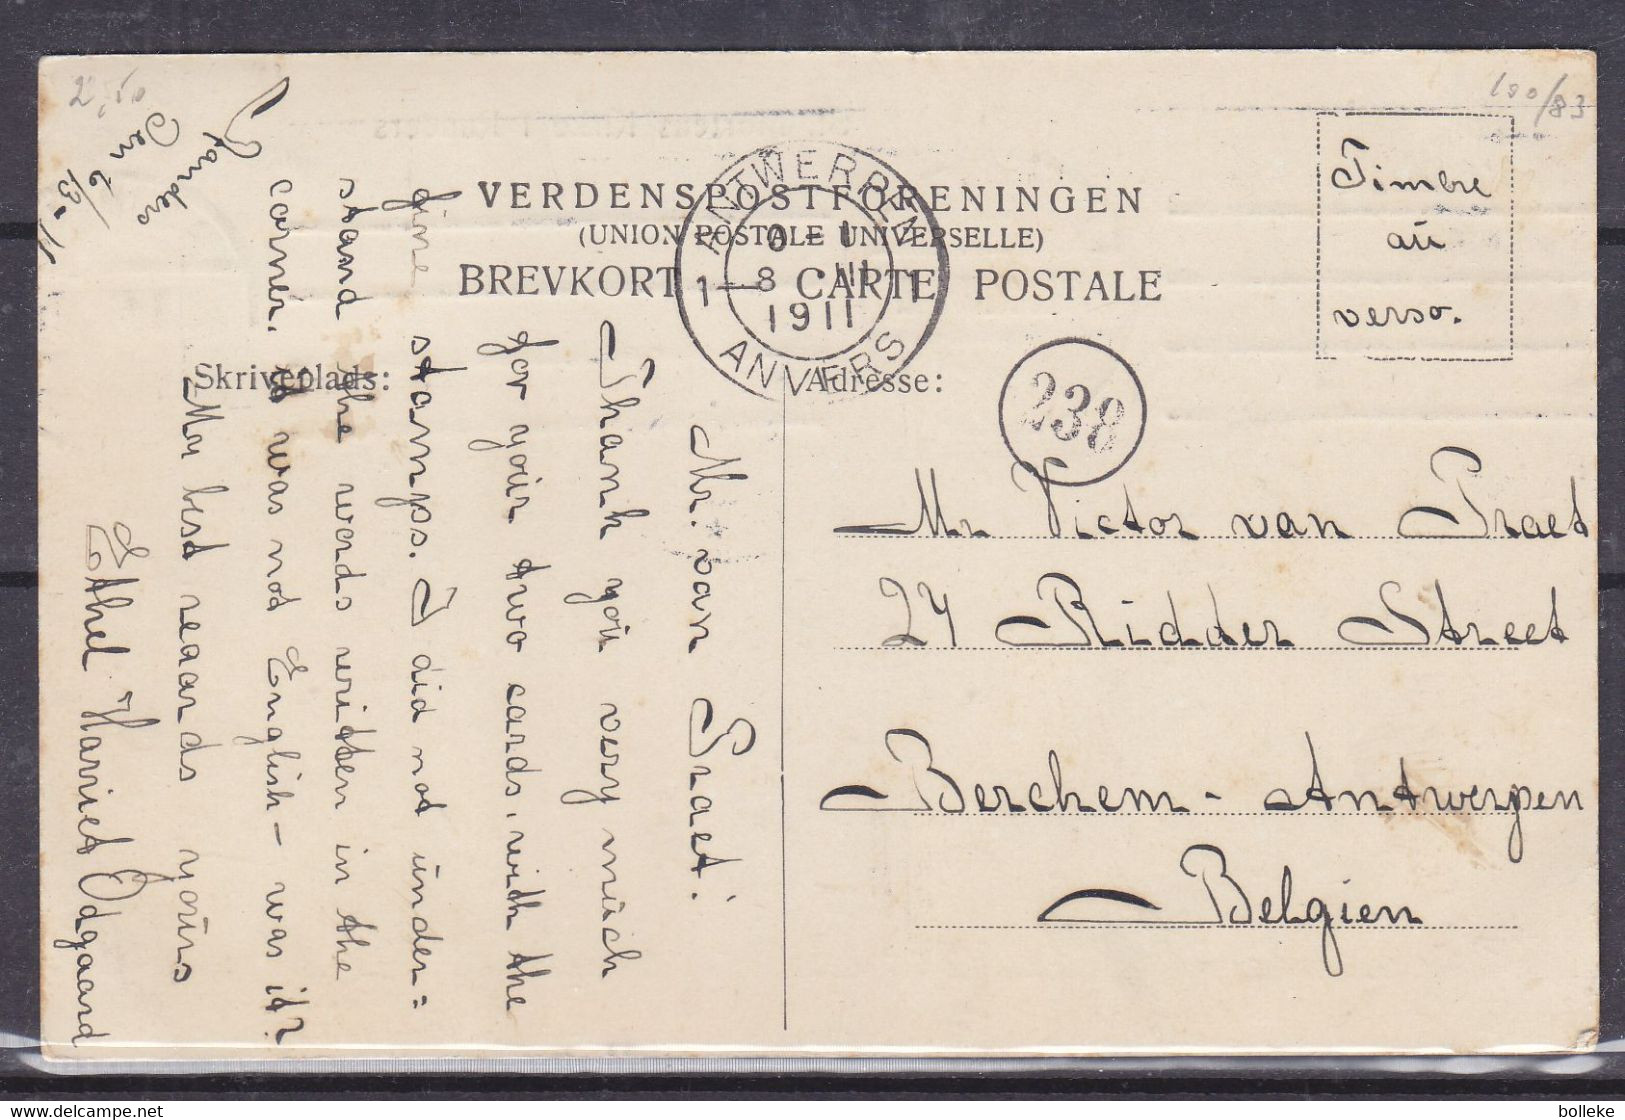 Danemark - Carte Postale De 1911 - Oblit Randers - Exp Vers Antwerpen - église - Briefe U. Dokumente